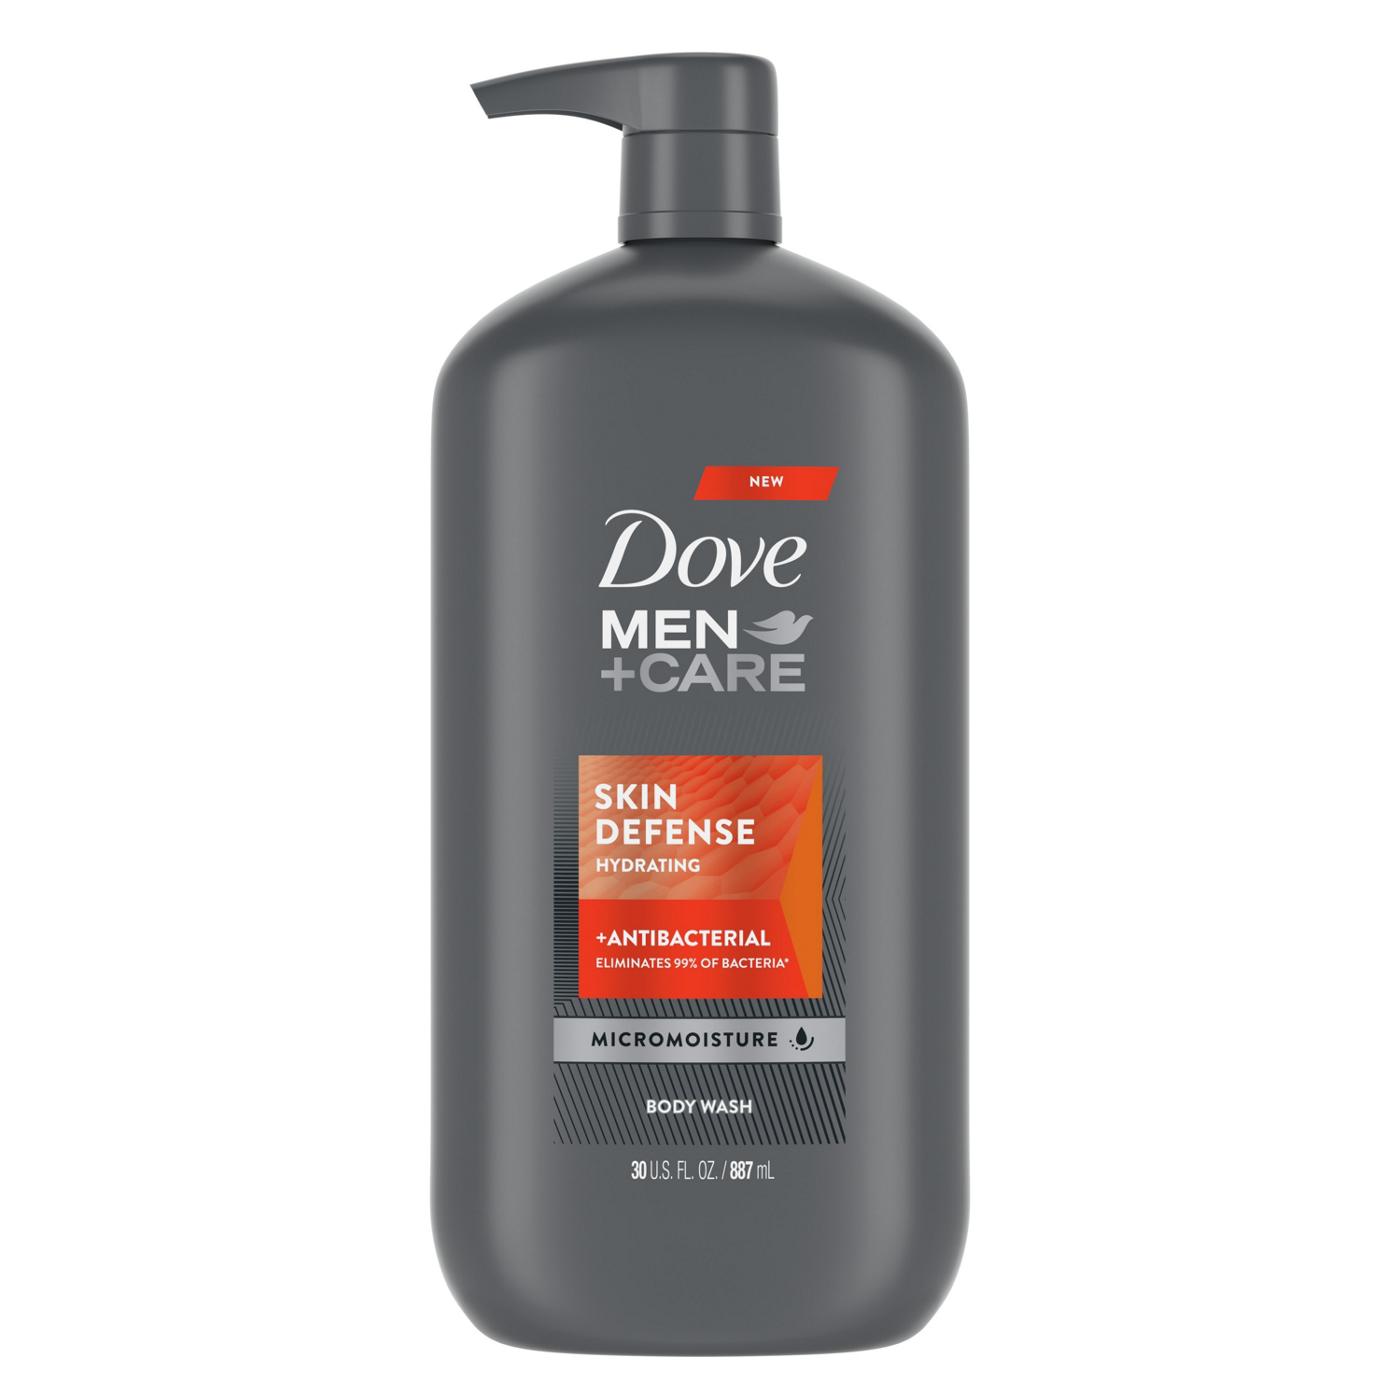 Dove Men+Care Body Wash - Skin Defense; image 1 of 3